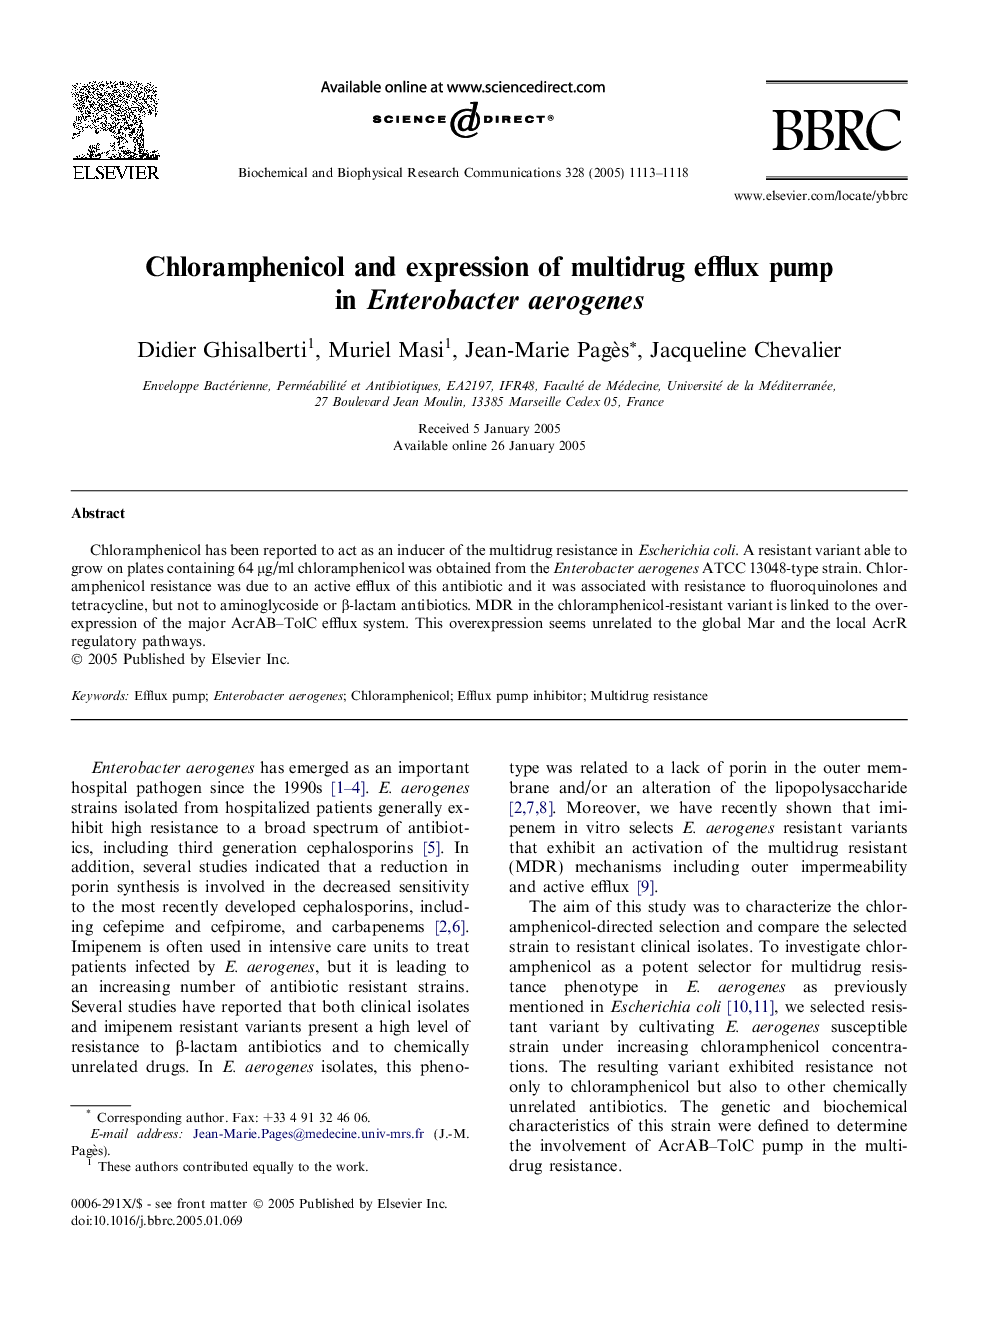 Chloramphenicol and expression of multidrug efflux pump in Enterobacter aerogenes